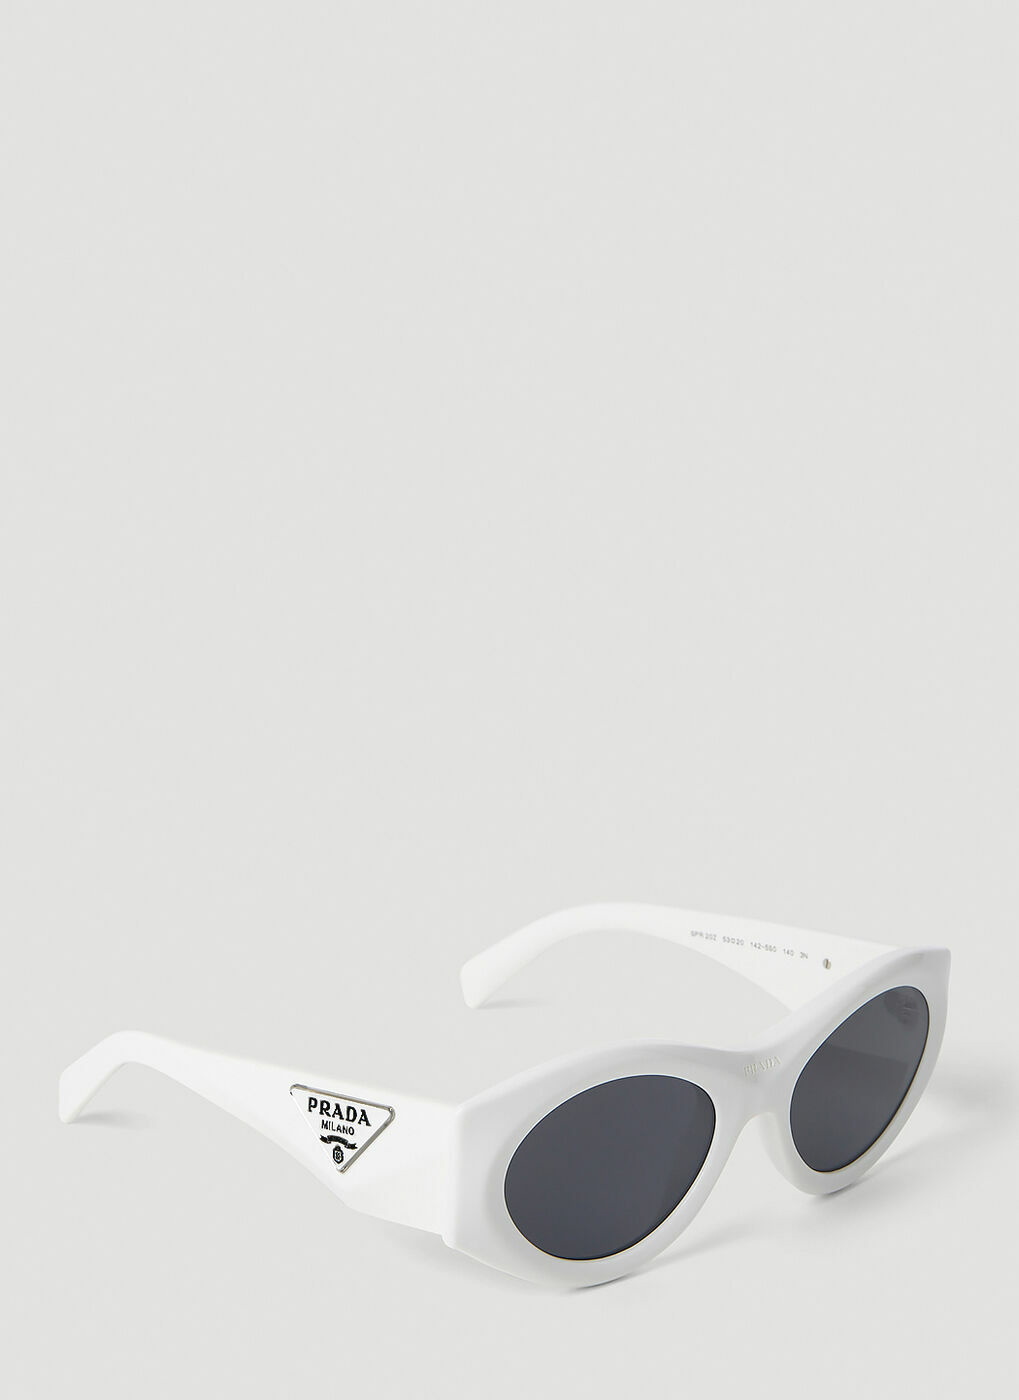 Prada 53mm Hexagon Sunglasses - Black | Editorialist